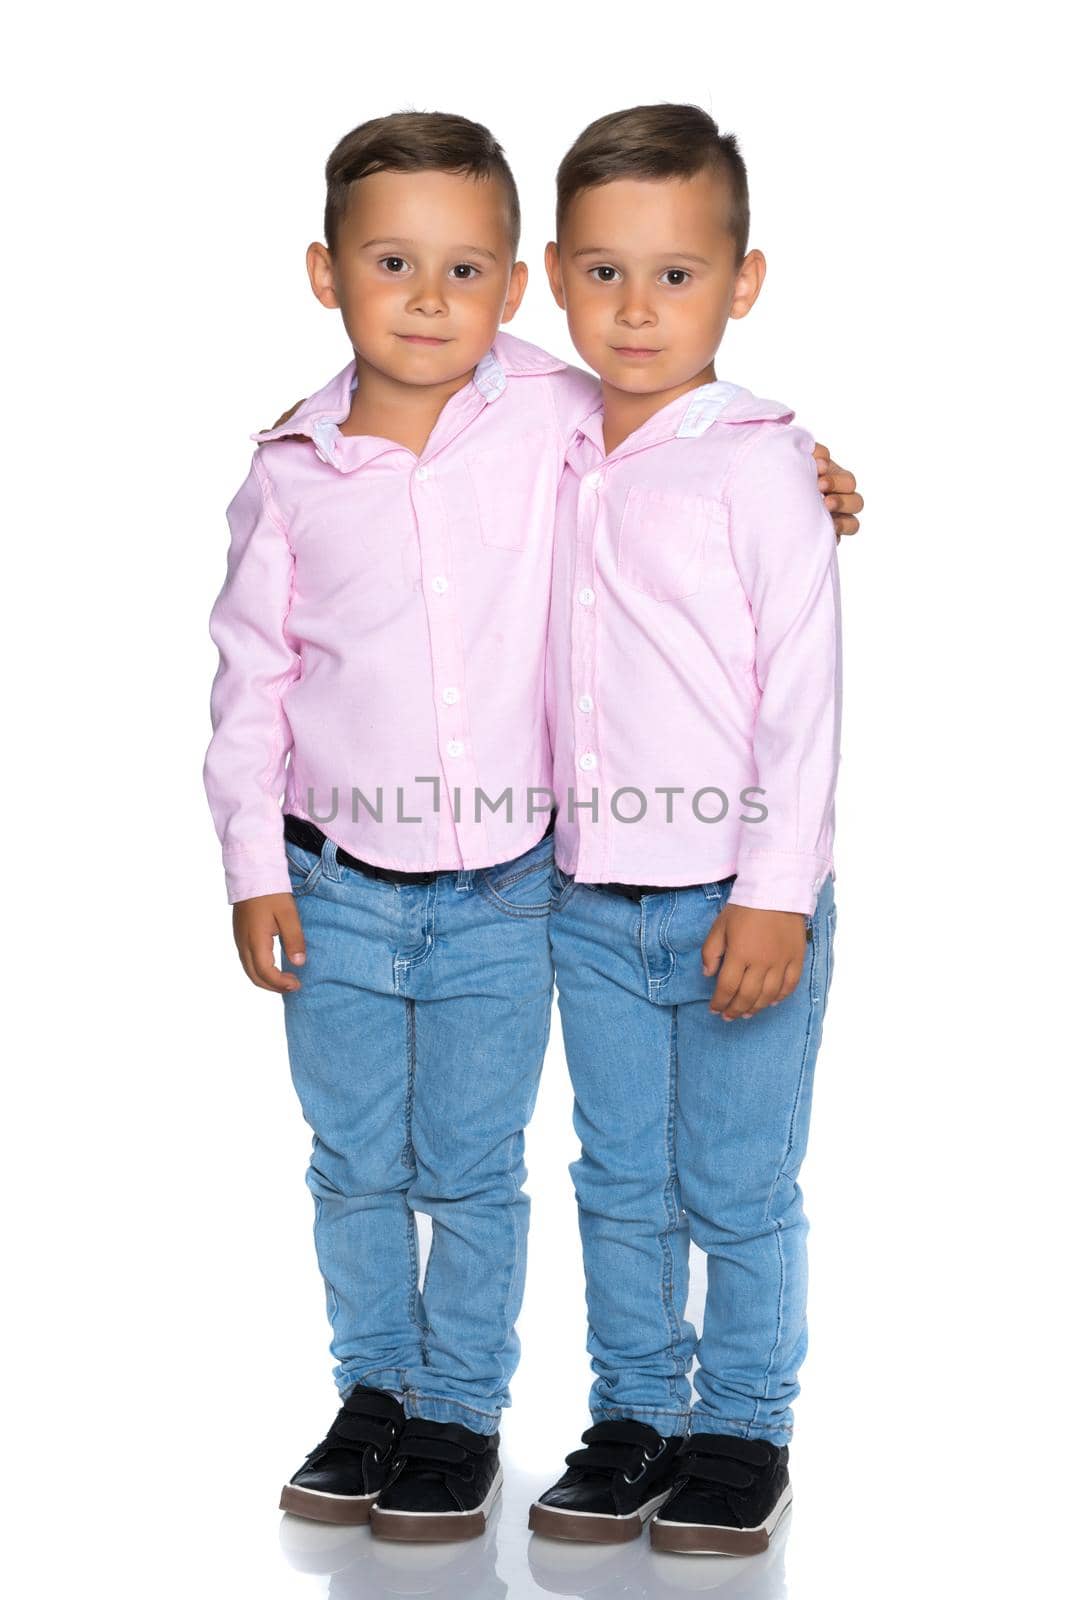 Two small boys in full growth. by kolesnikov_studio